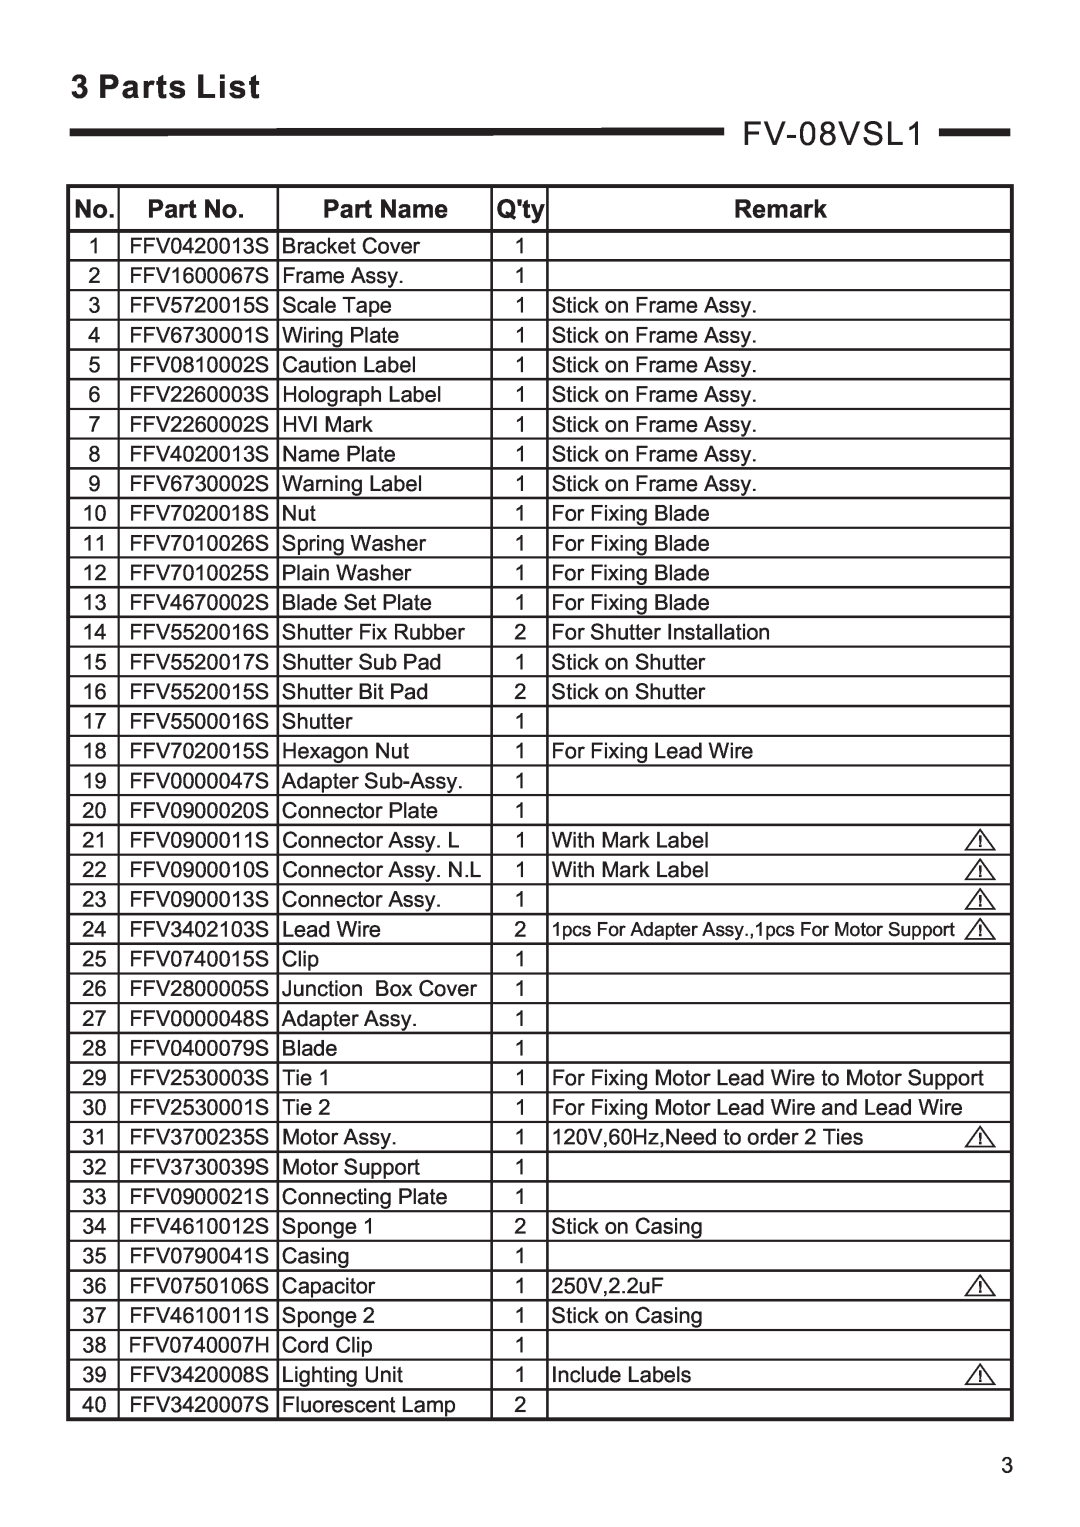 Panasonic FV-08VSL1 service manual Parts List, Part Name, Remark 